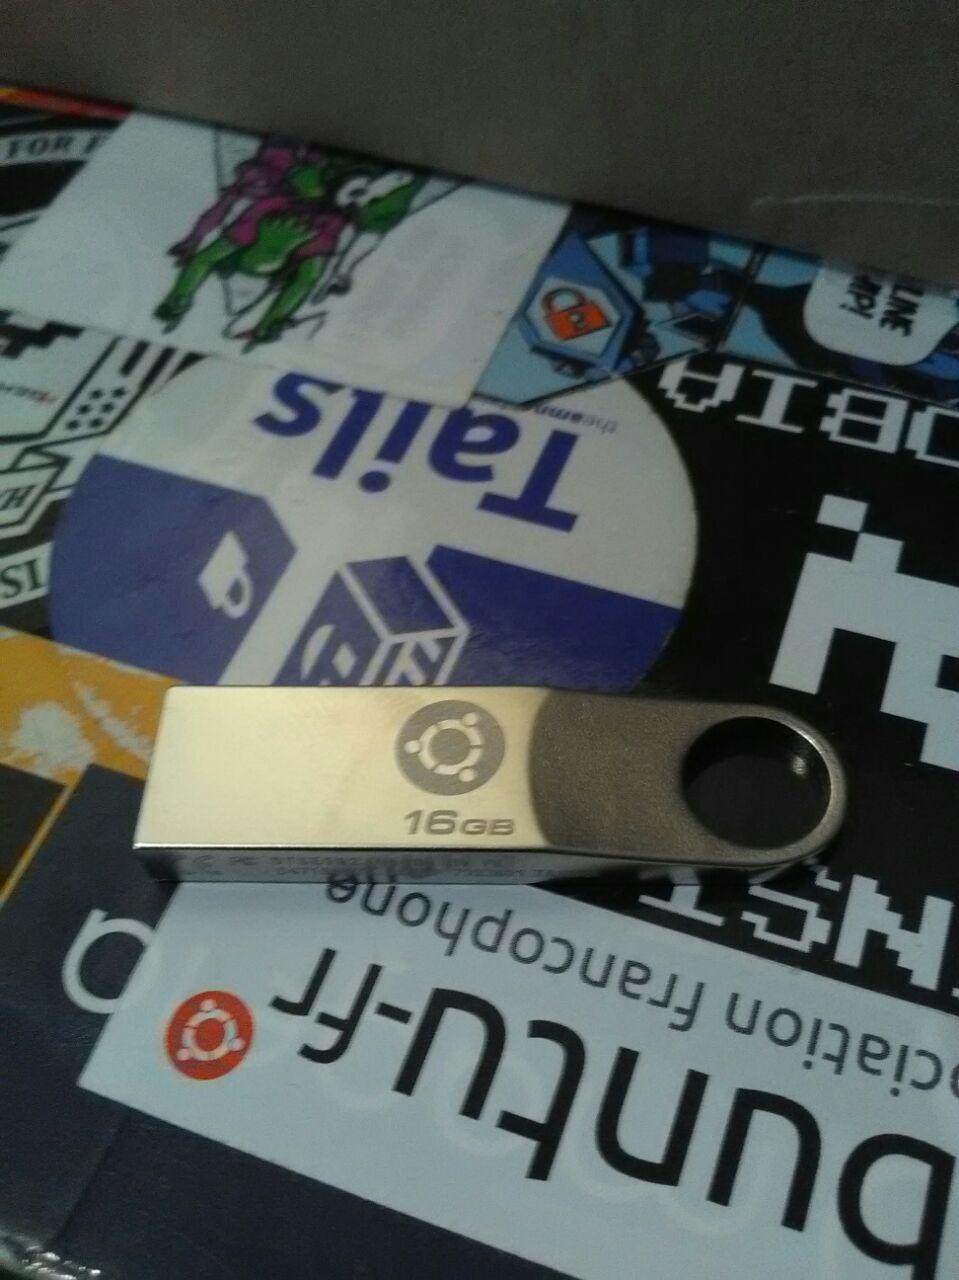 Ubuntu-fr USB key with engraved COF